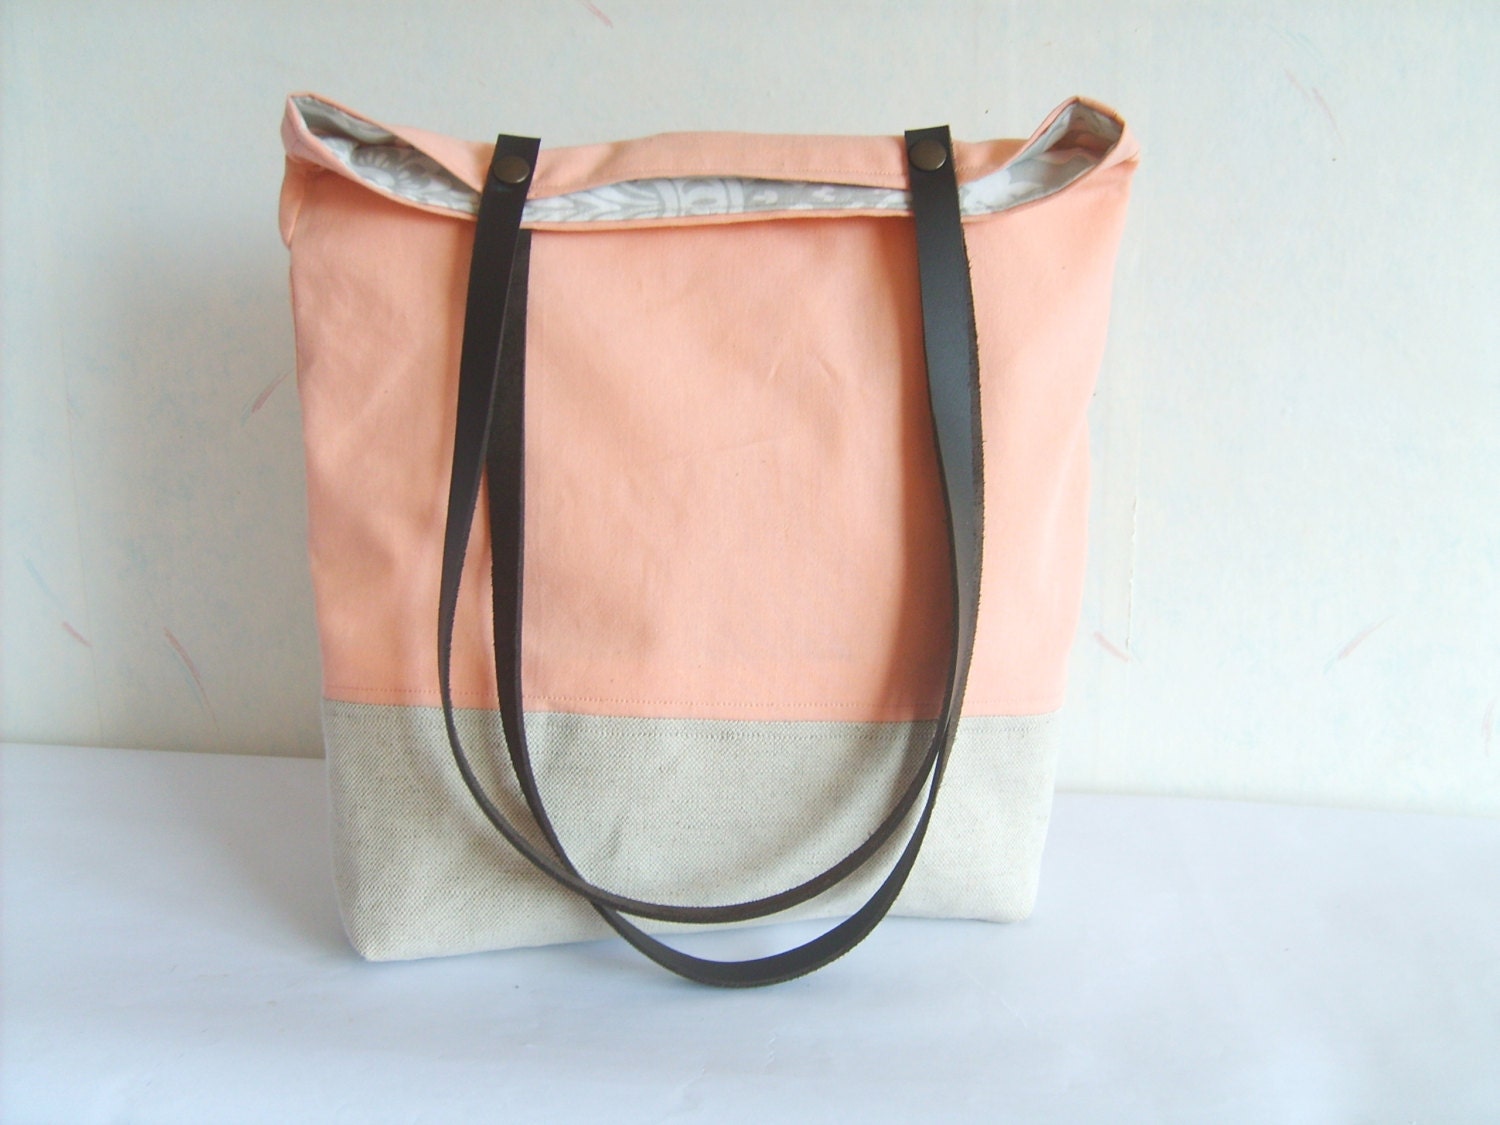 Peach tote salmon pink bag leather straps colorblock tote